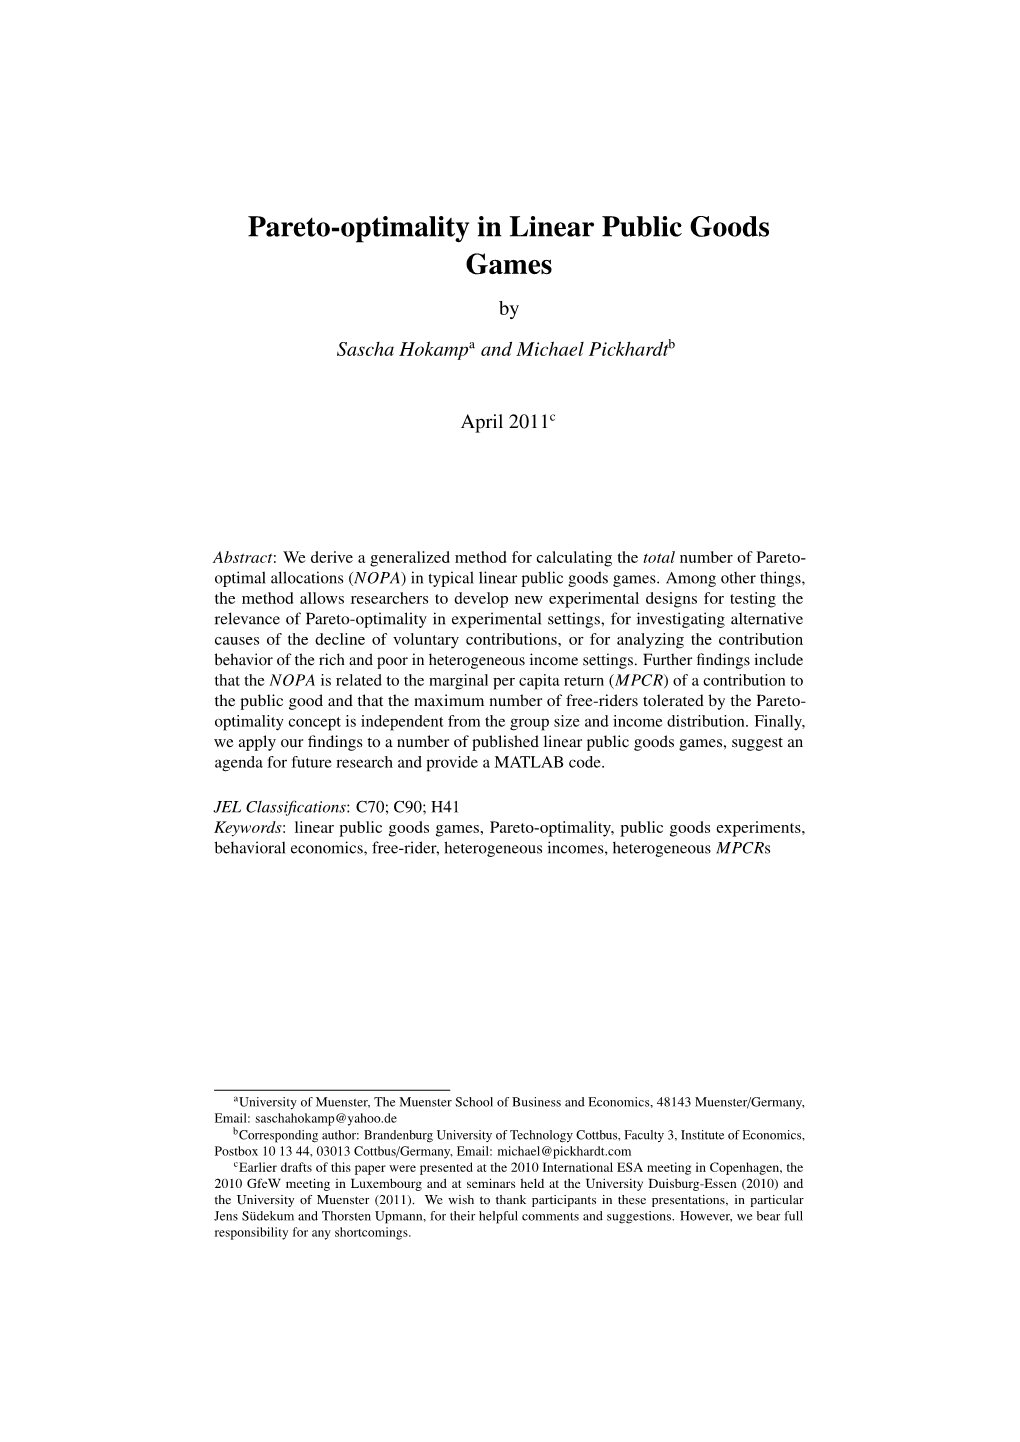 Pareto-Optimality in Linear Public Goods Games by Sascha Hokampa and Michael Pickhardtb